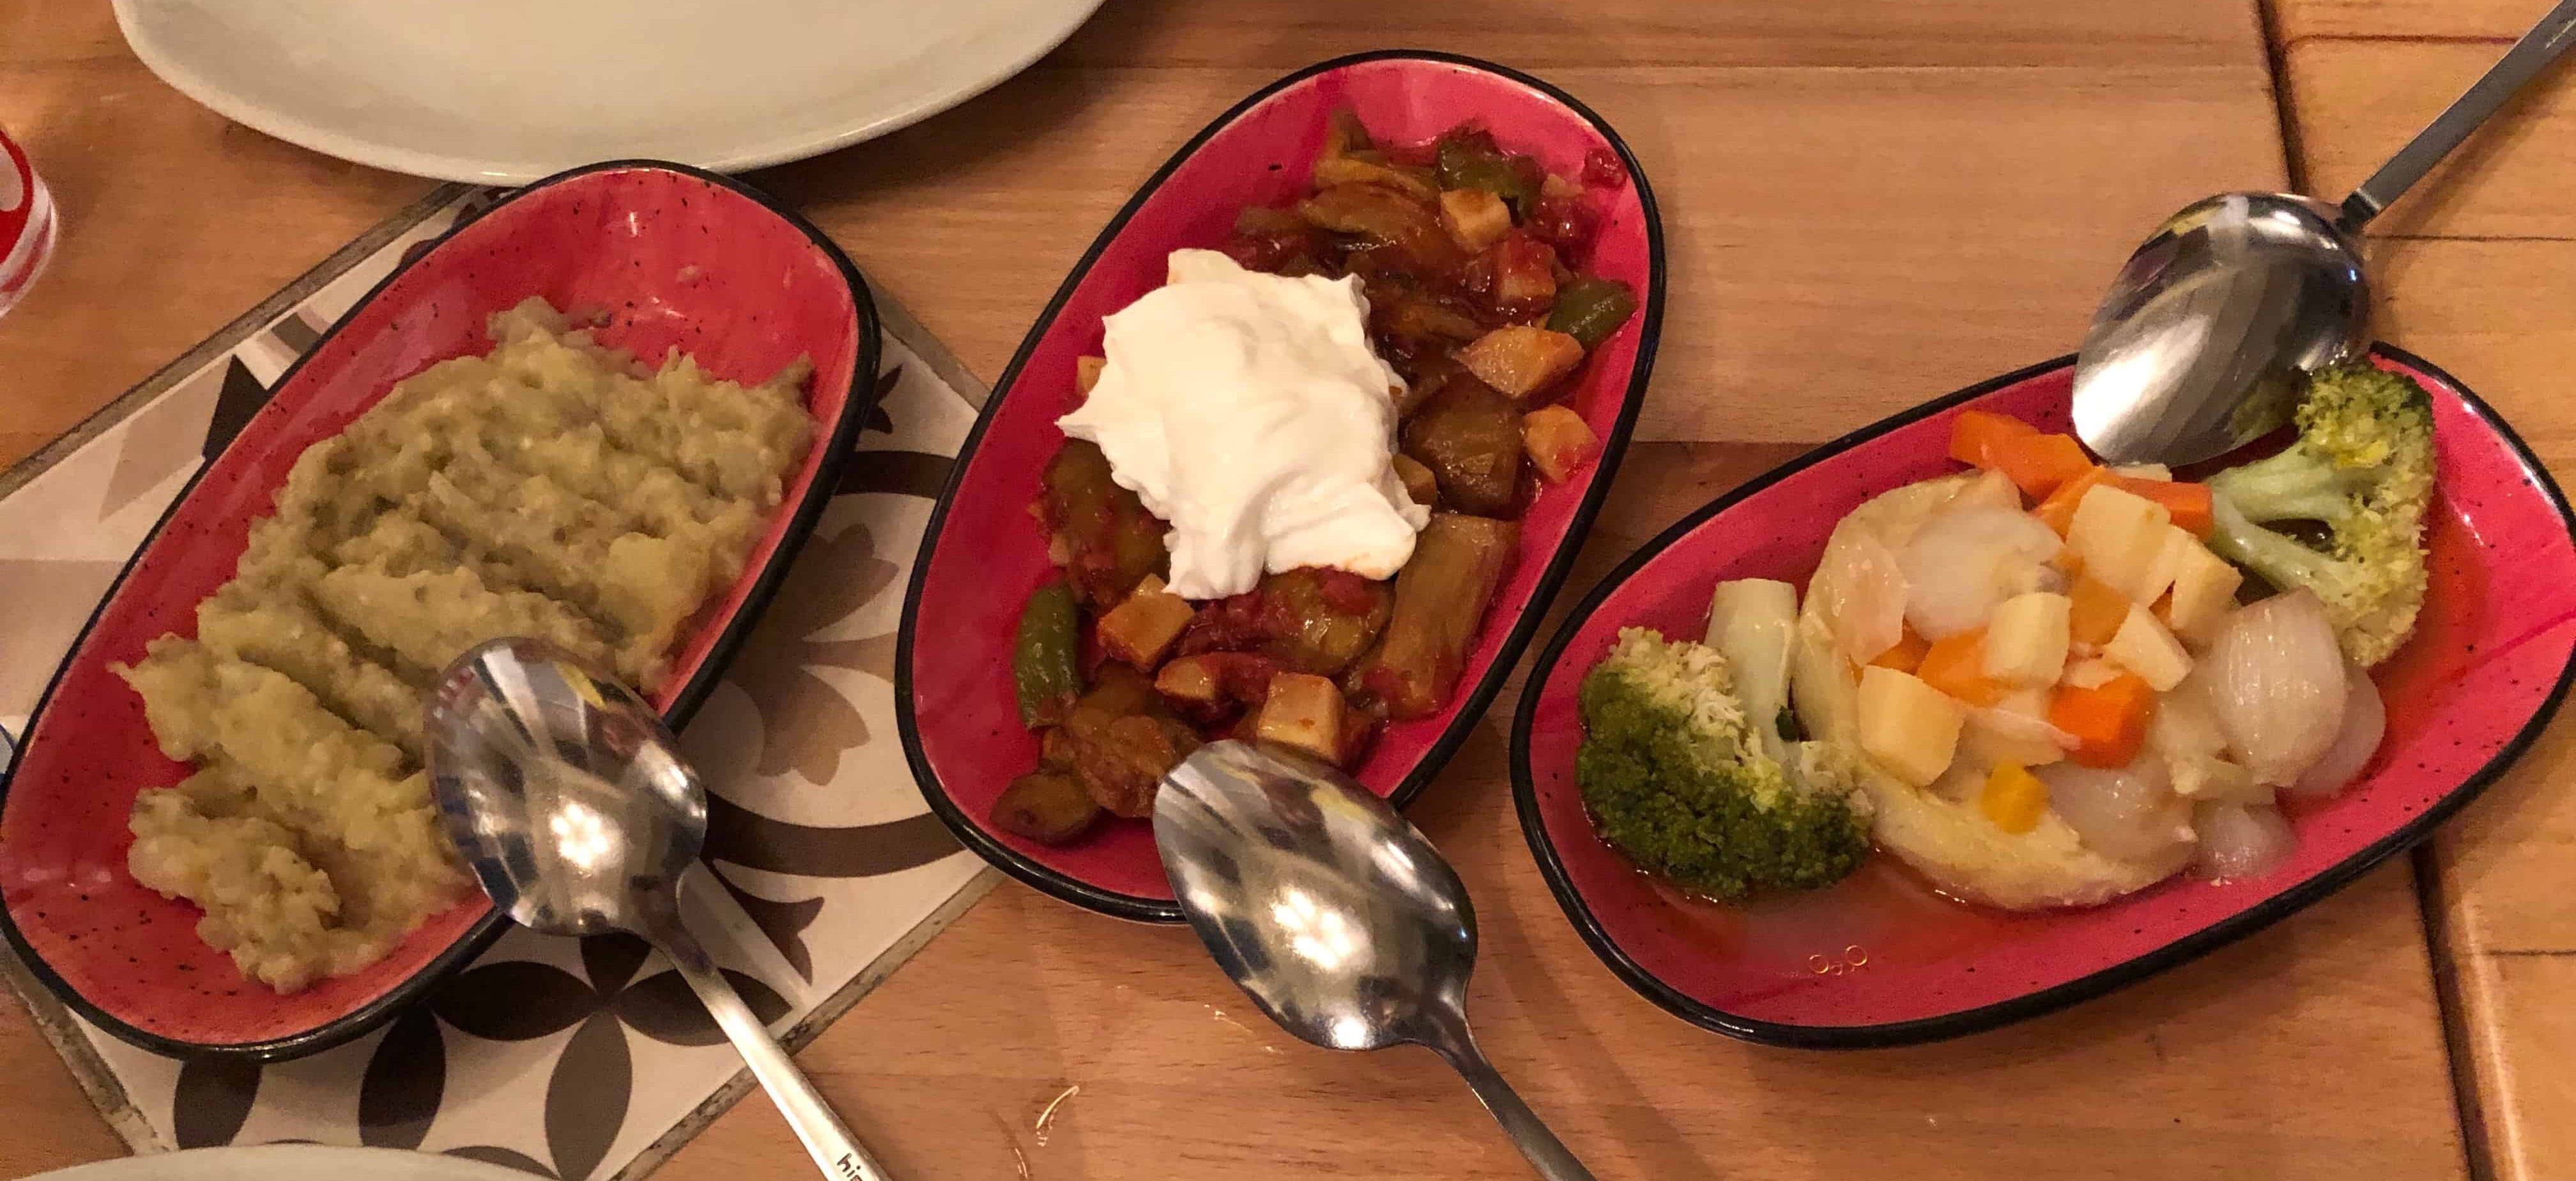 Meze dishes at Ali Ocakbaşı